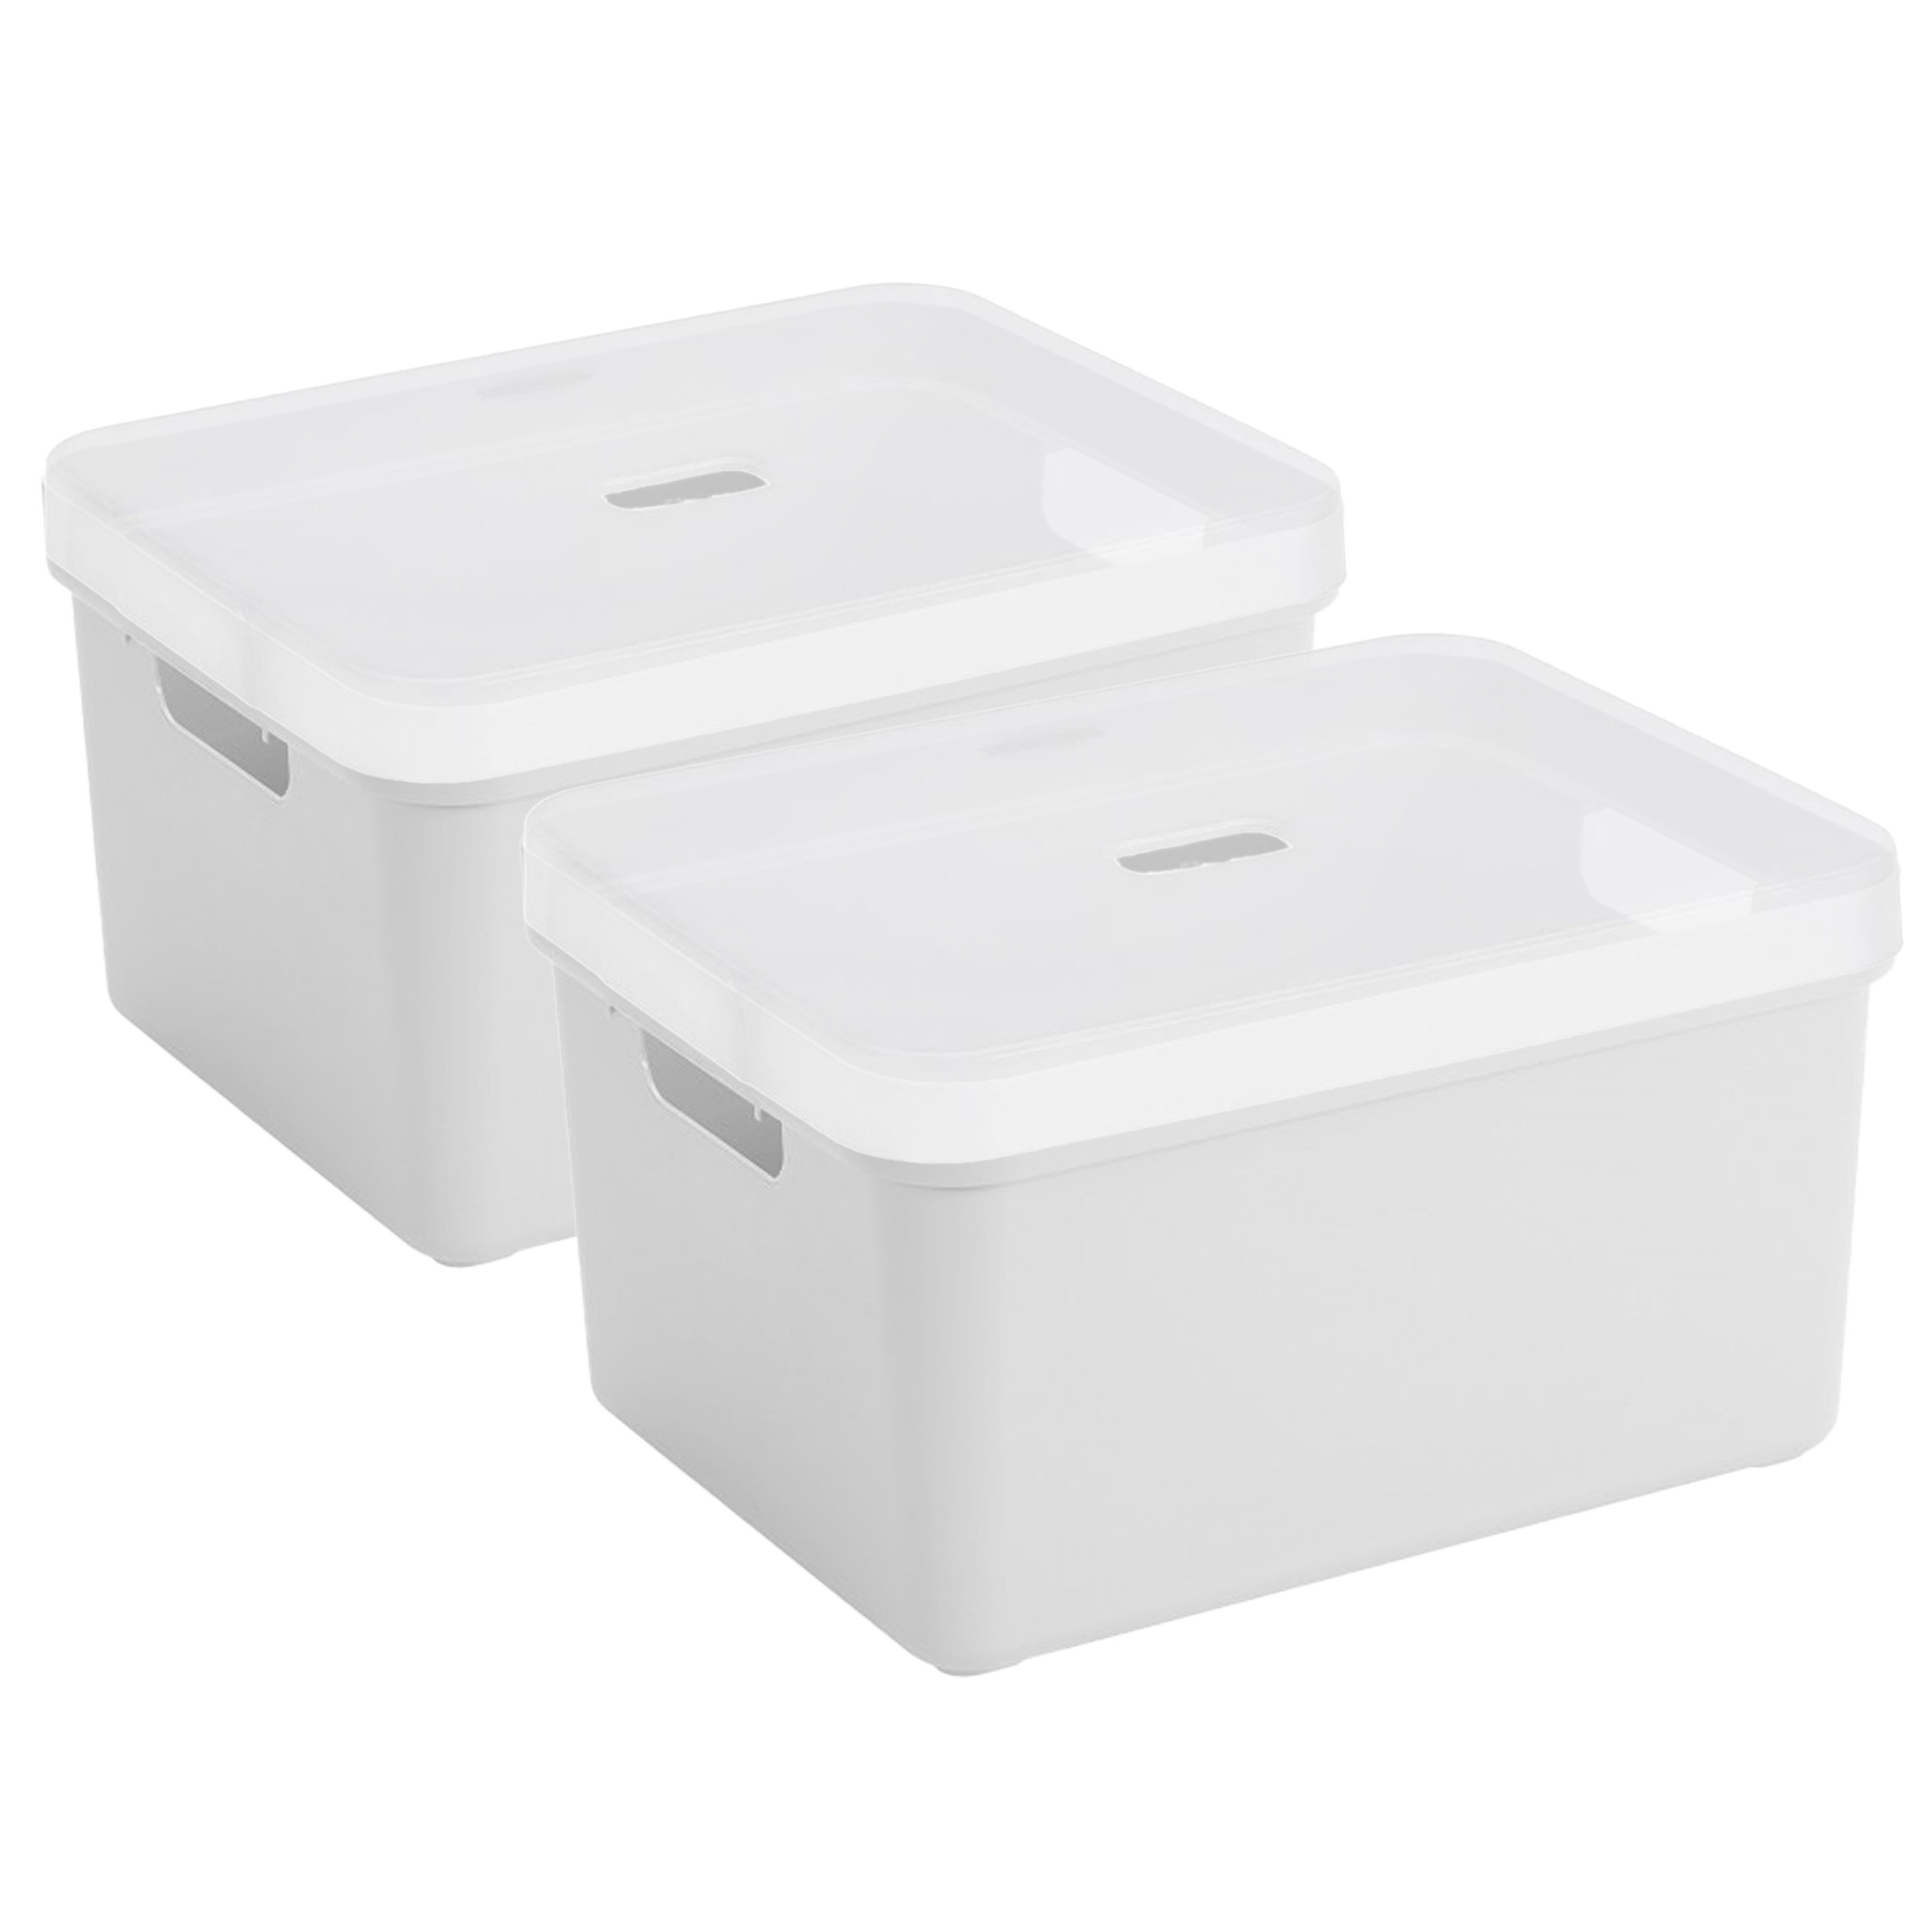 2x Sunware opbergbox-mand 32 liter wit kunststof met transparante deksel